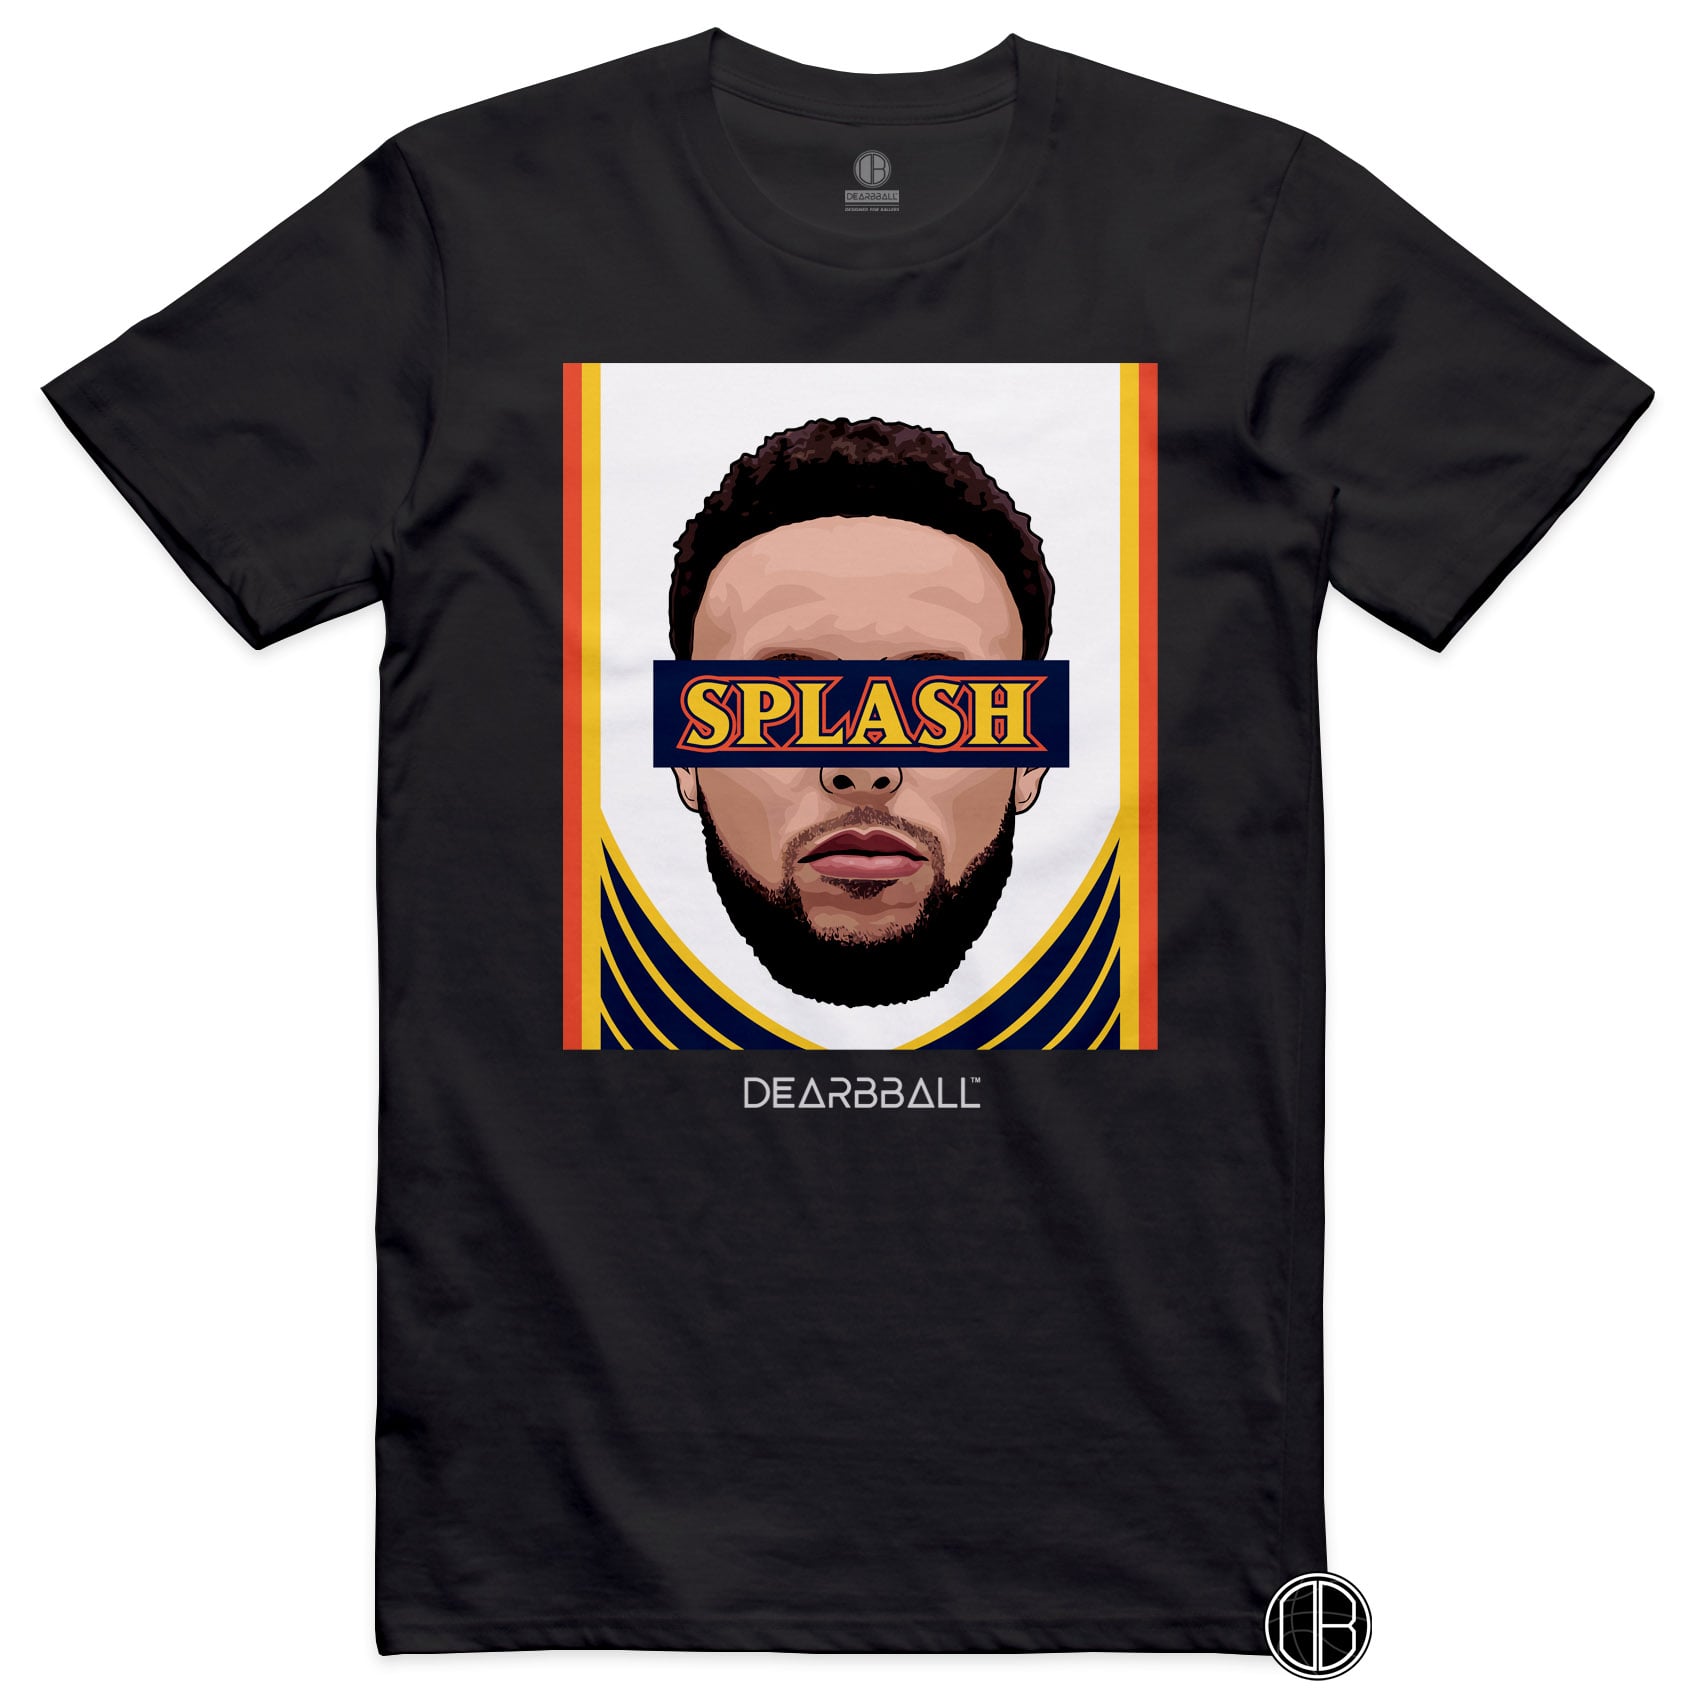 DearBBall T-Shirt - SPLASH San Francisco Edition